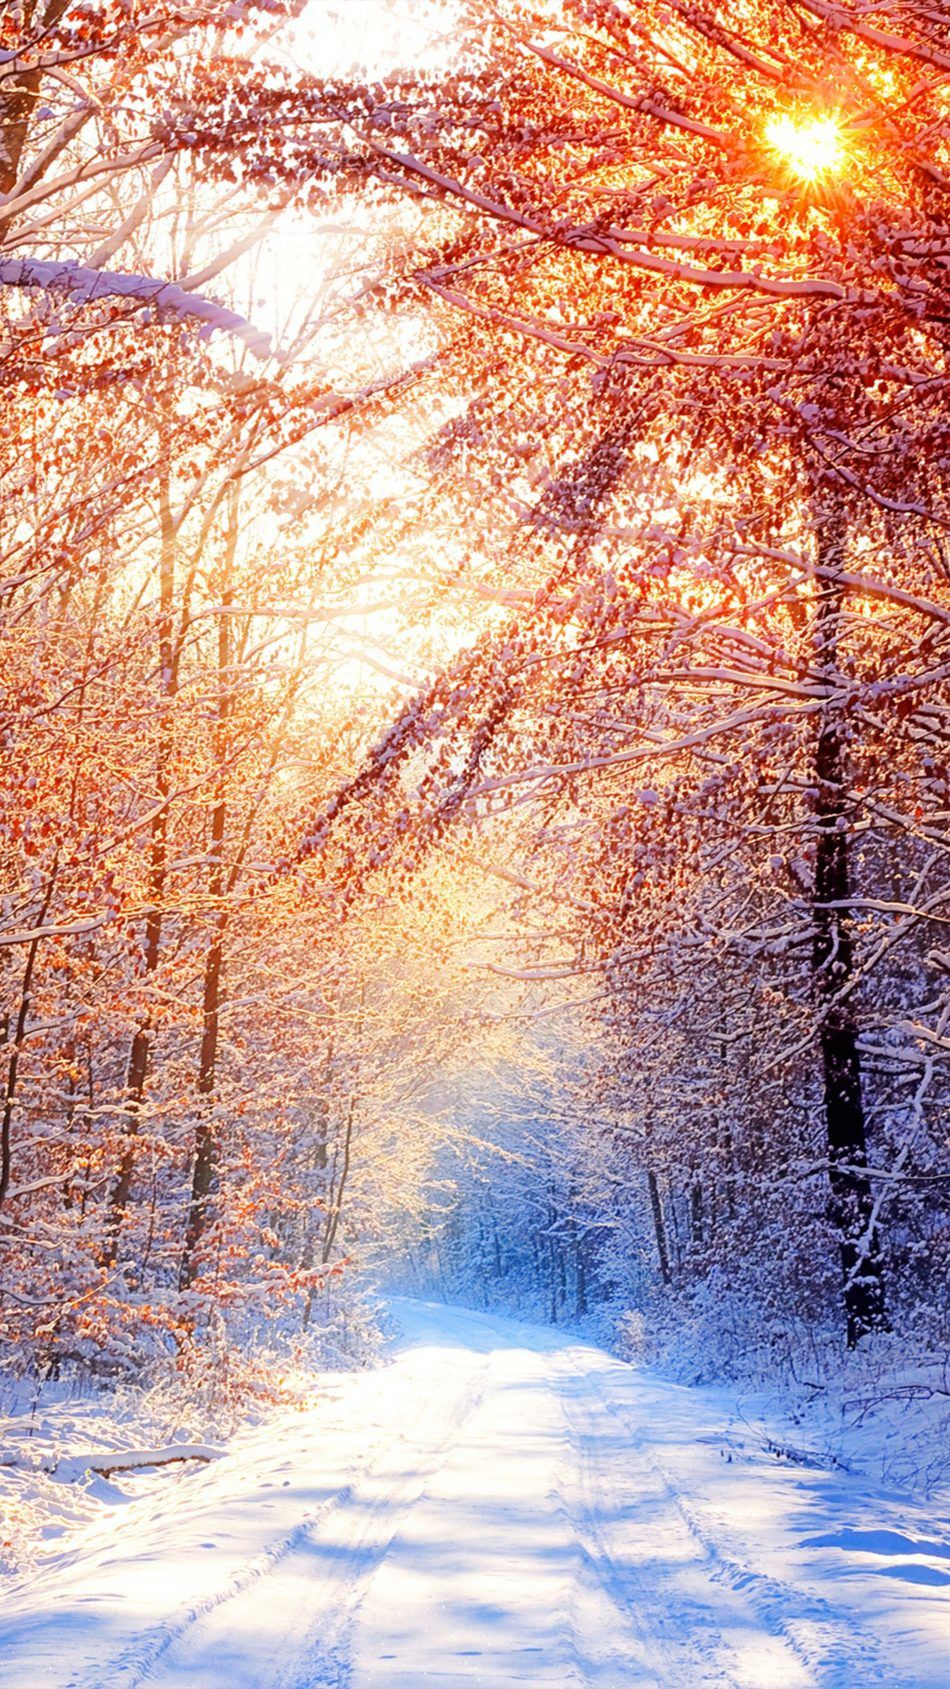 Snow Trees Winter Morning 4k Ultra HD Mobile Wallpaper Wallpaper For iPhone